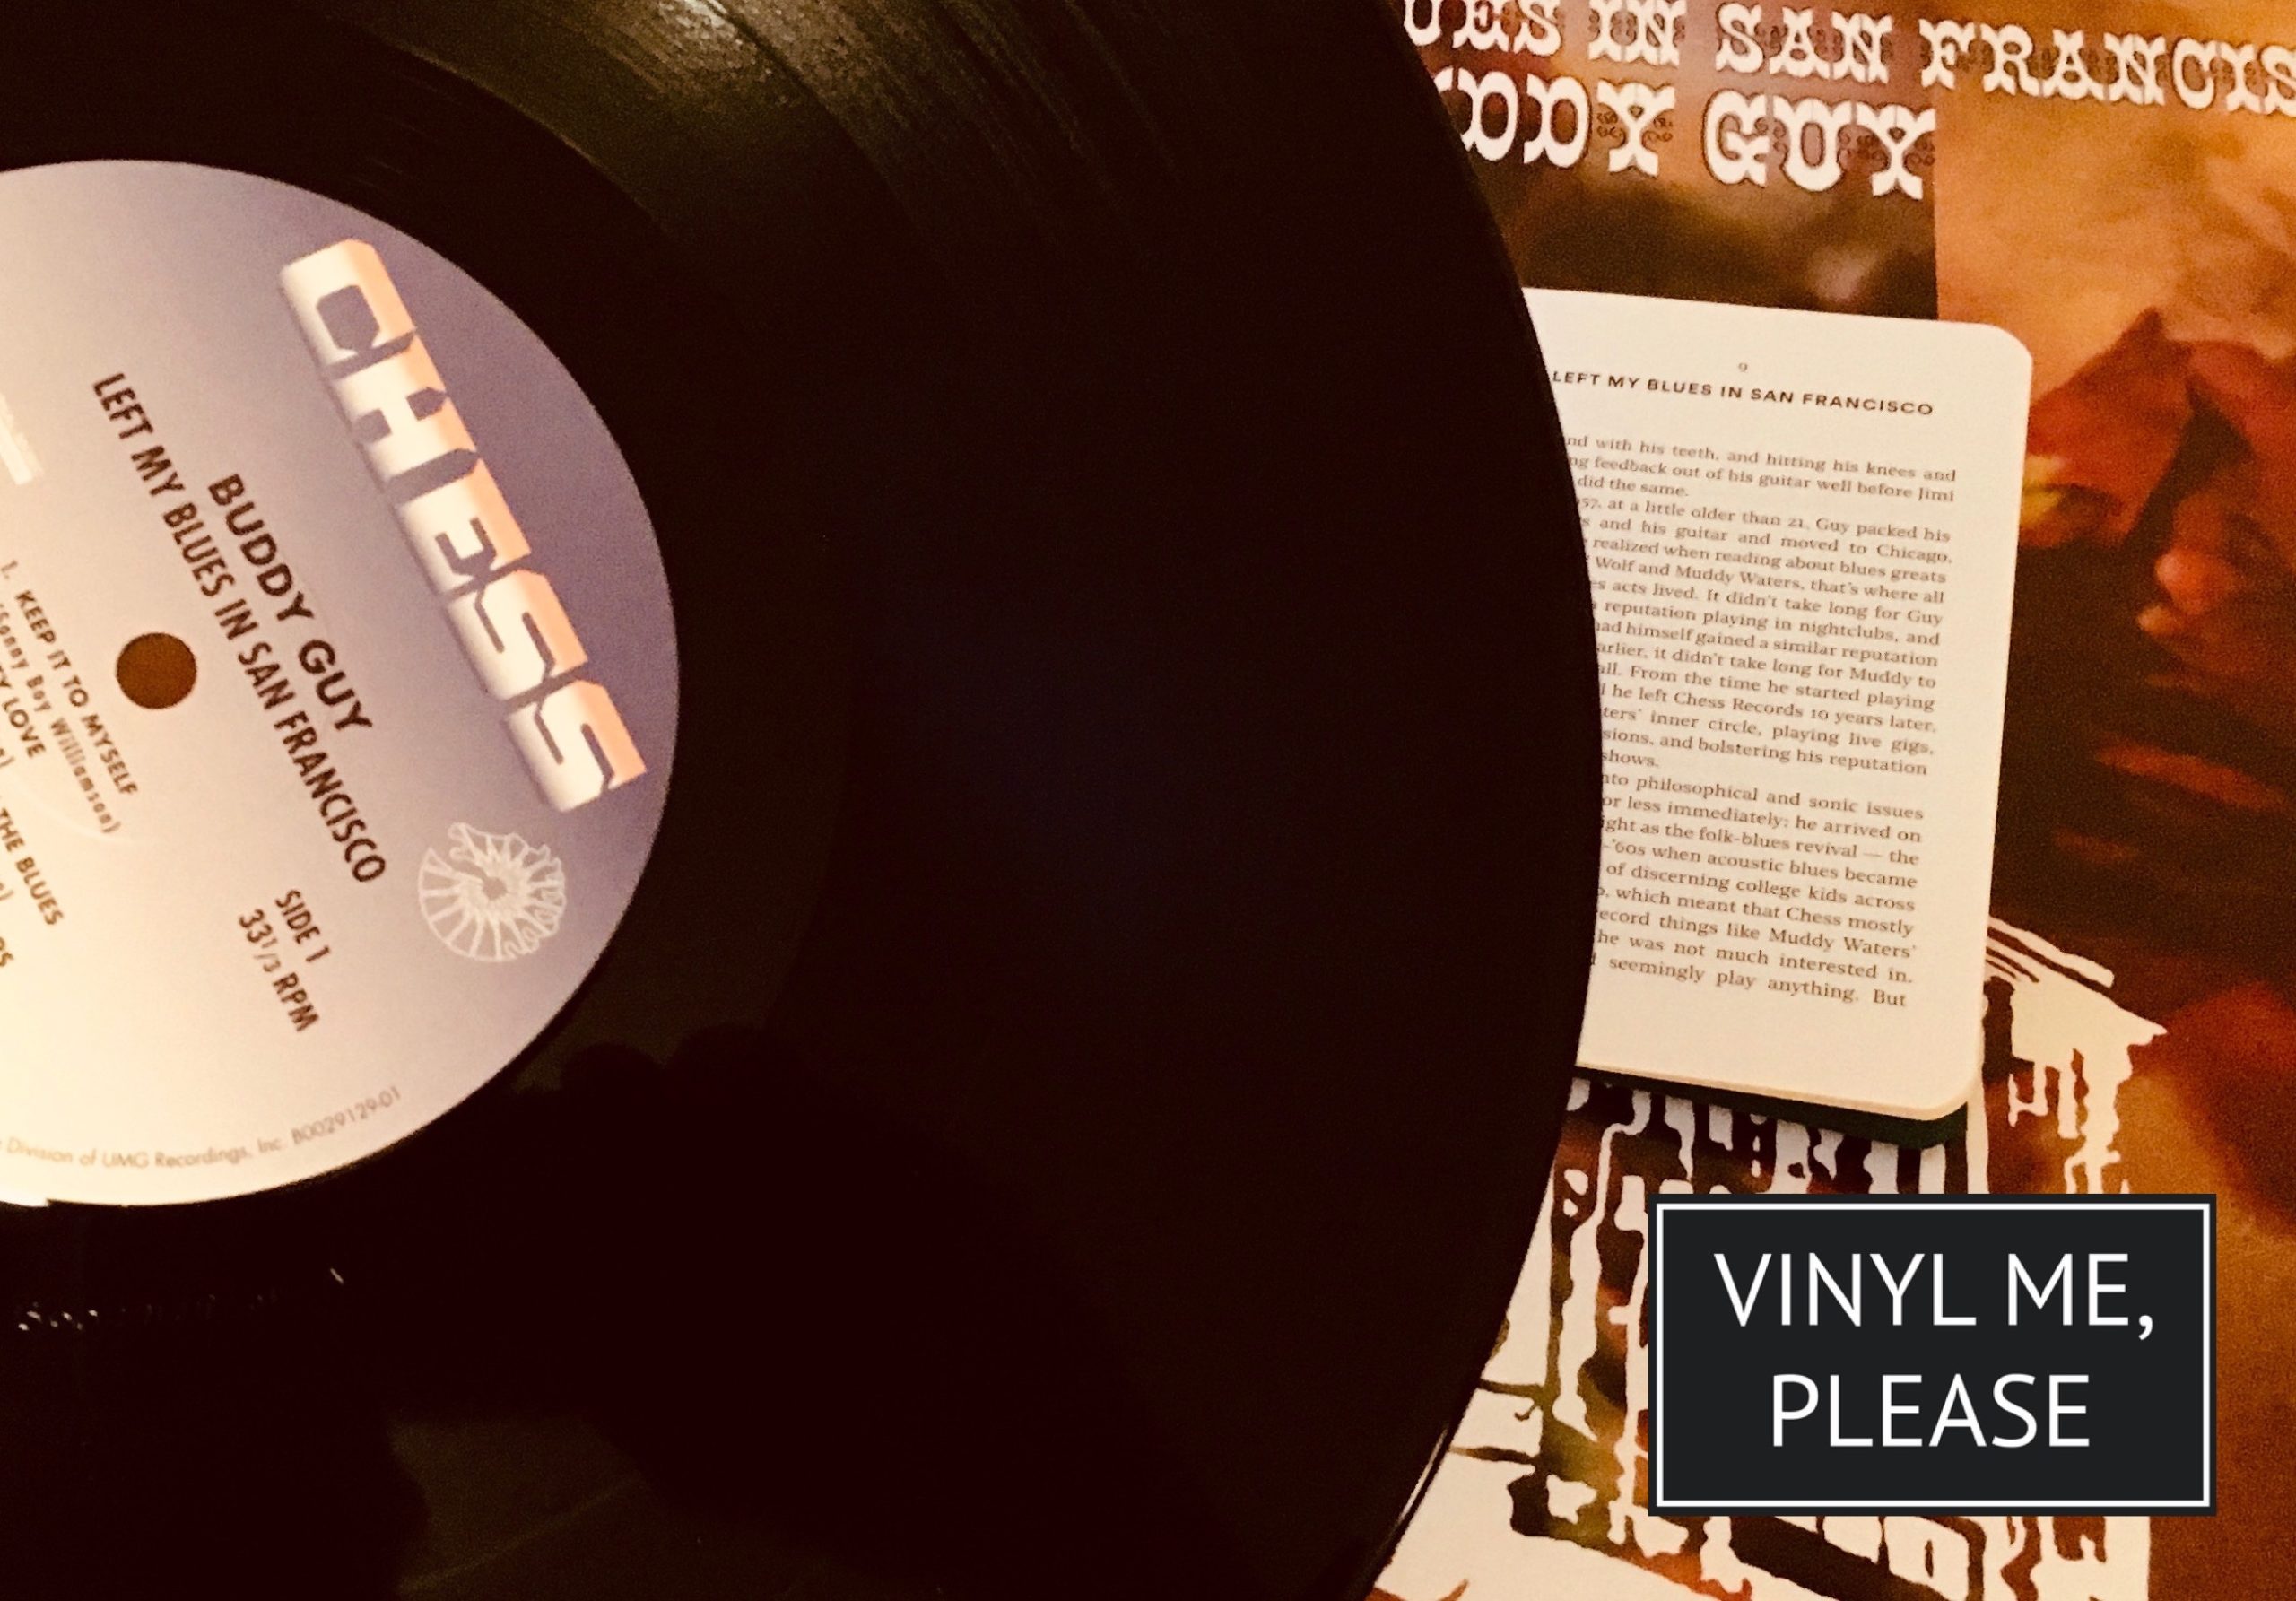 Vinyl me, please march edition: buddy guy ‘left my blues in san francisco’